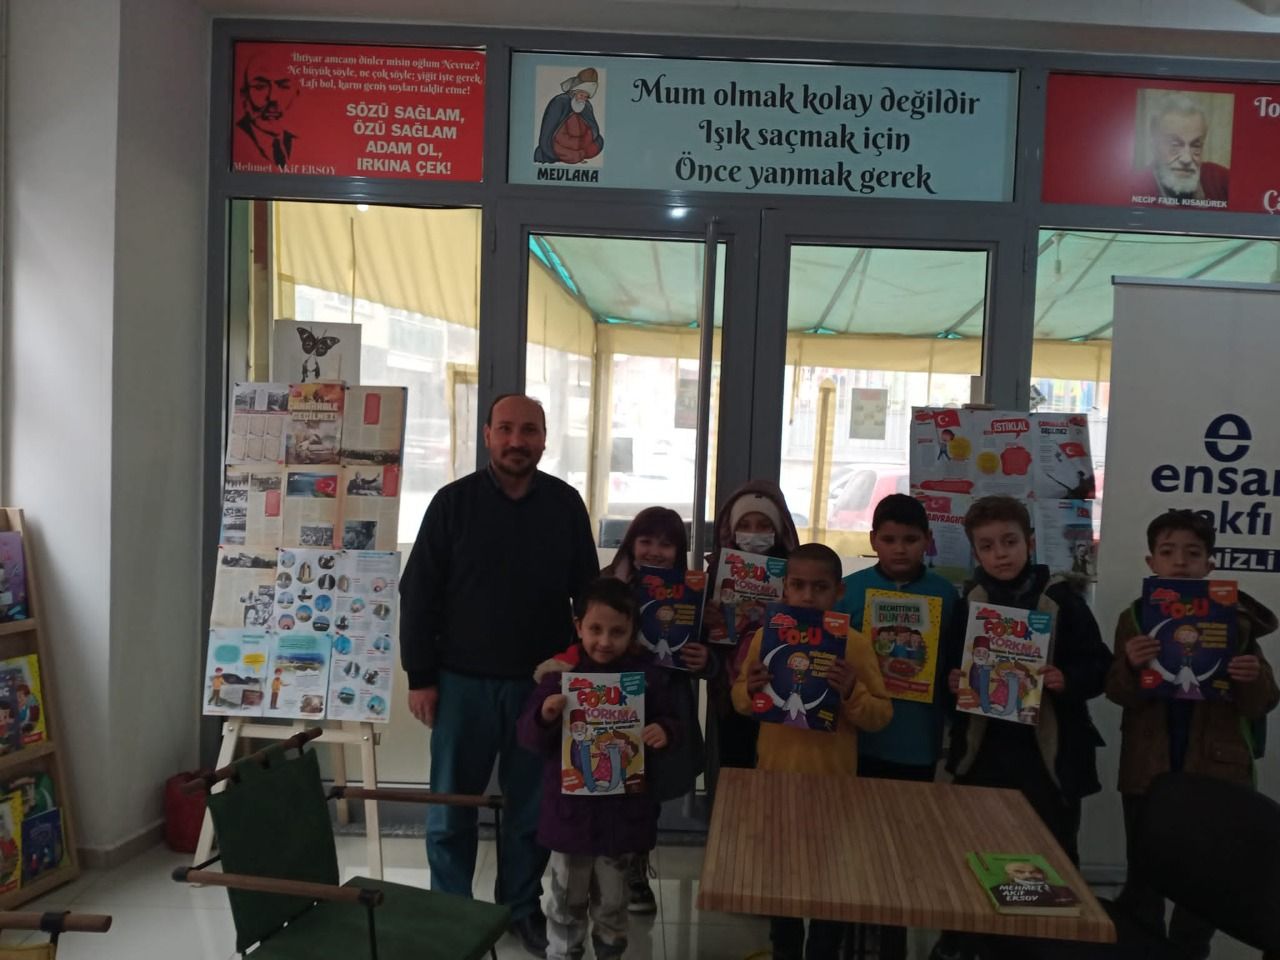 Denizli Branch of Maaile and Milli Çocuk Magazines organized a meaningful photography exhibition in Denizli